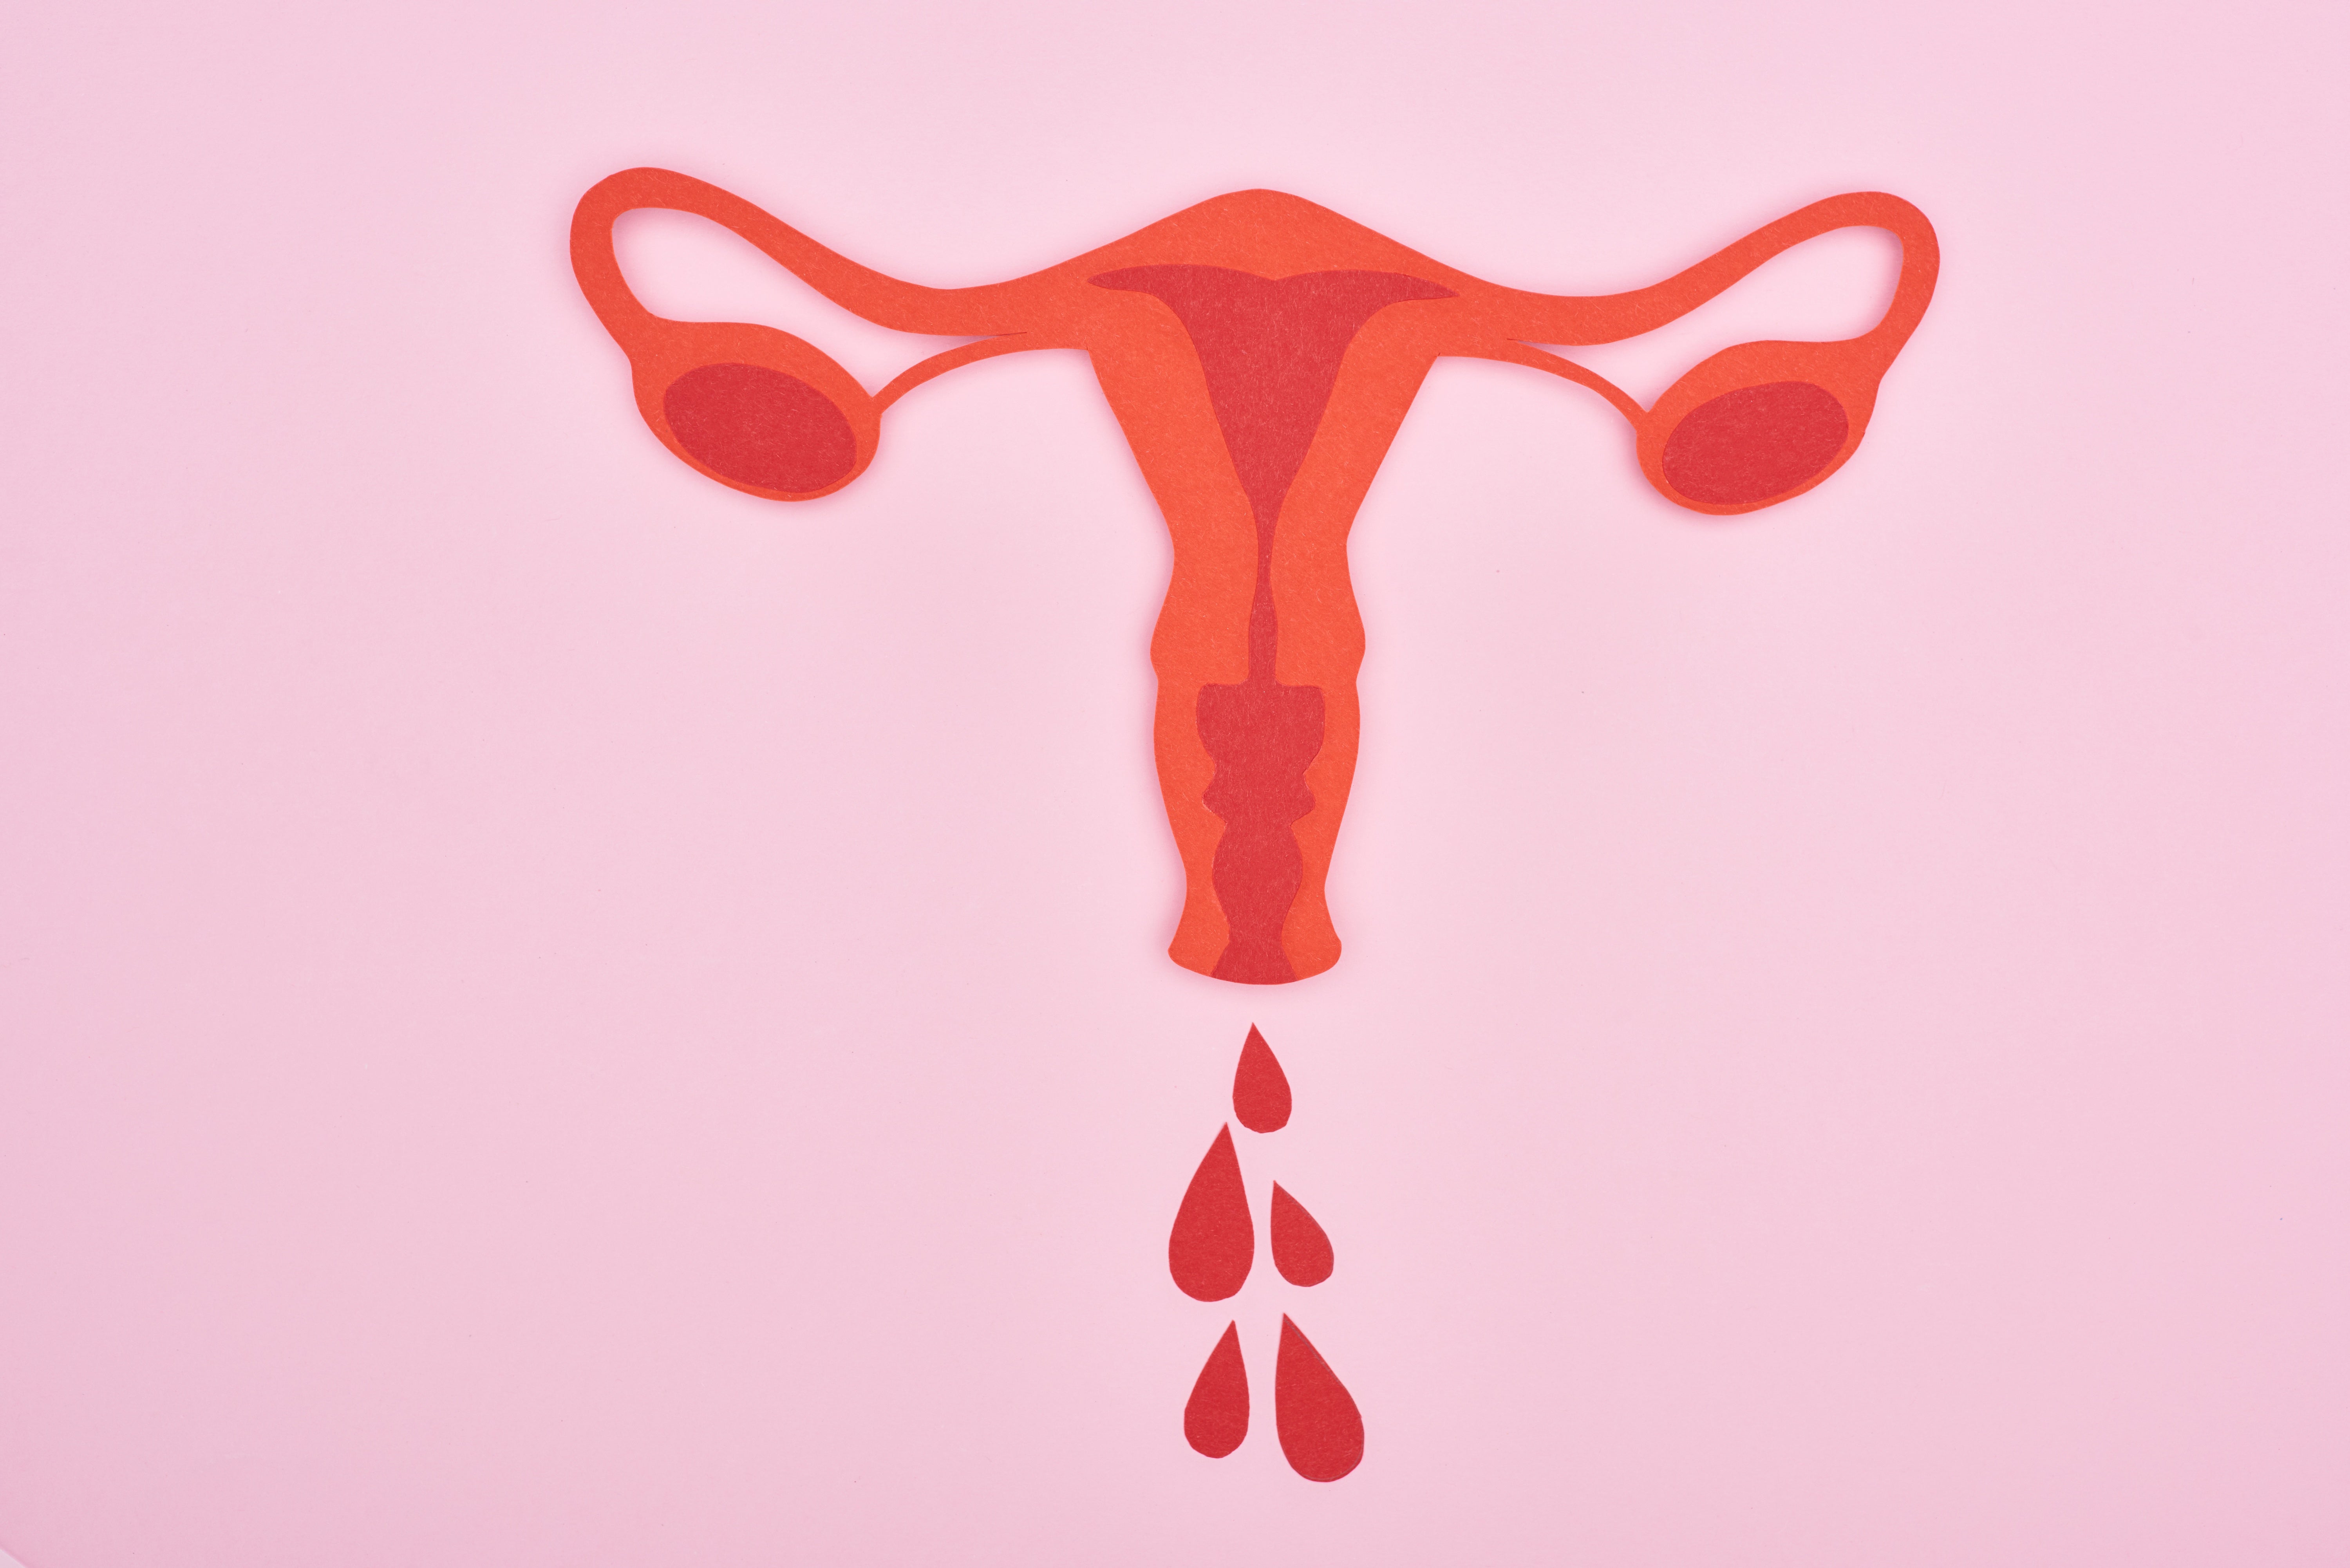 To Better Understand Women’s Health, We Need to Destigmatize Menstrual Blood